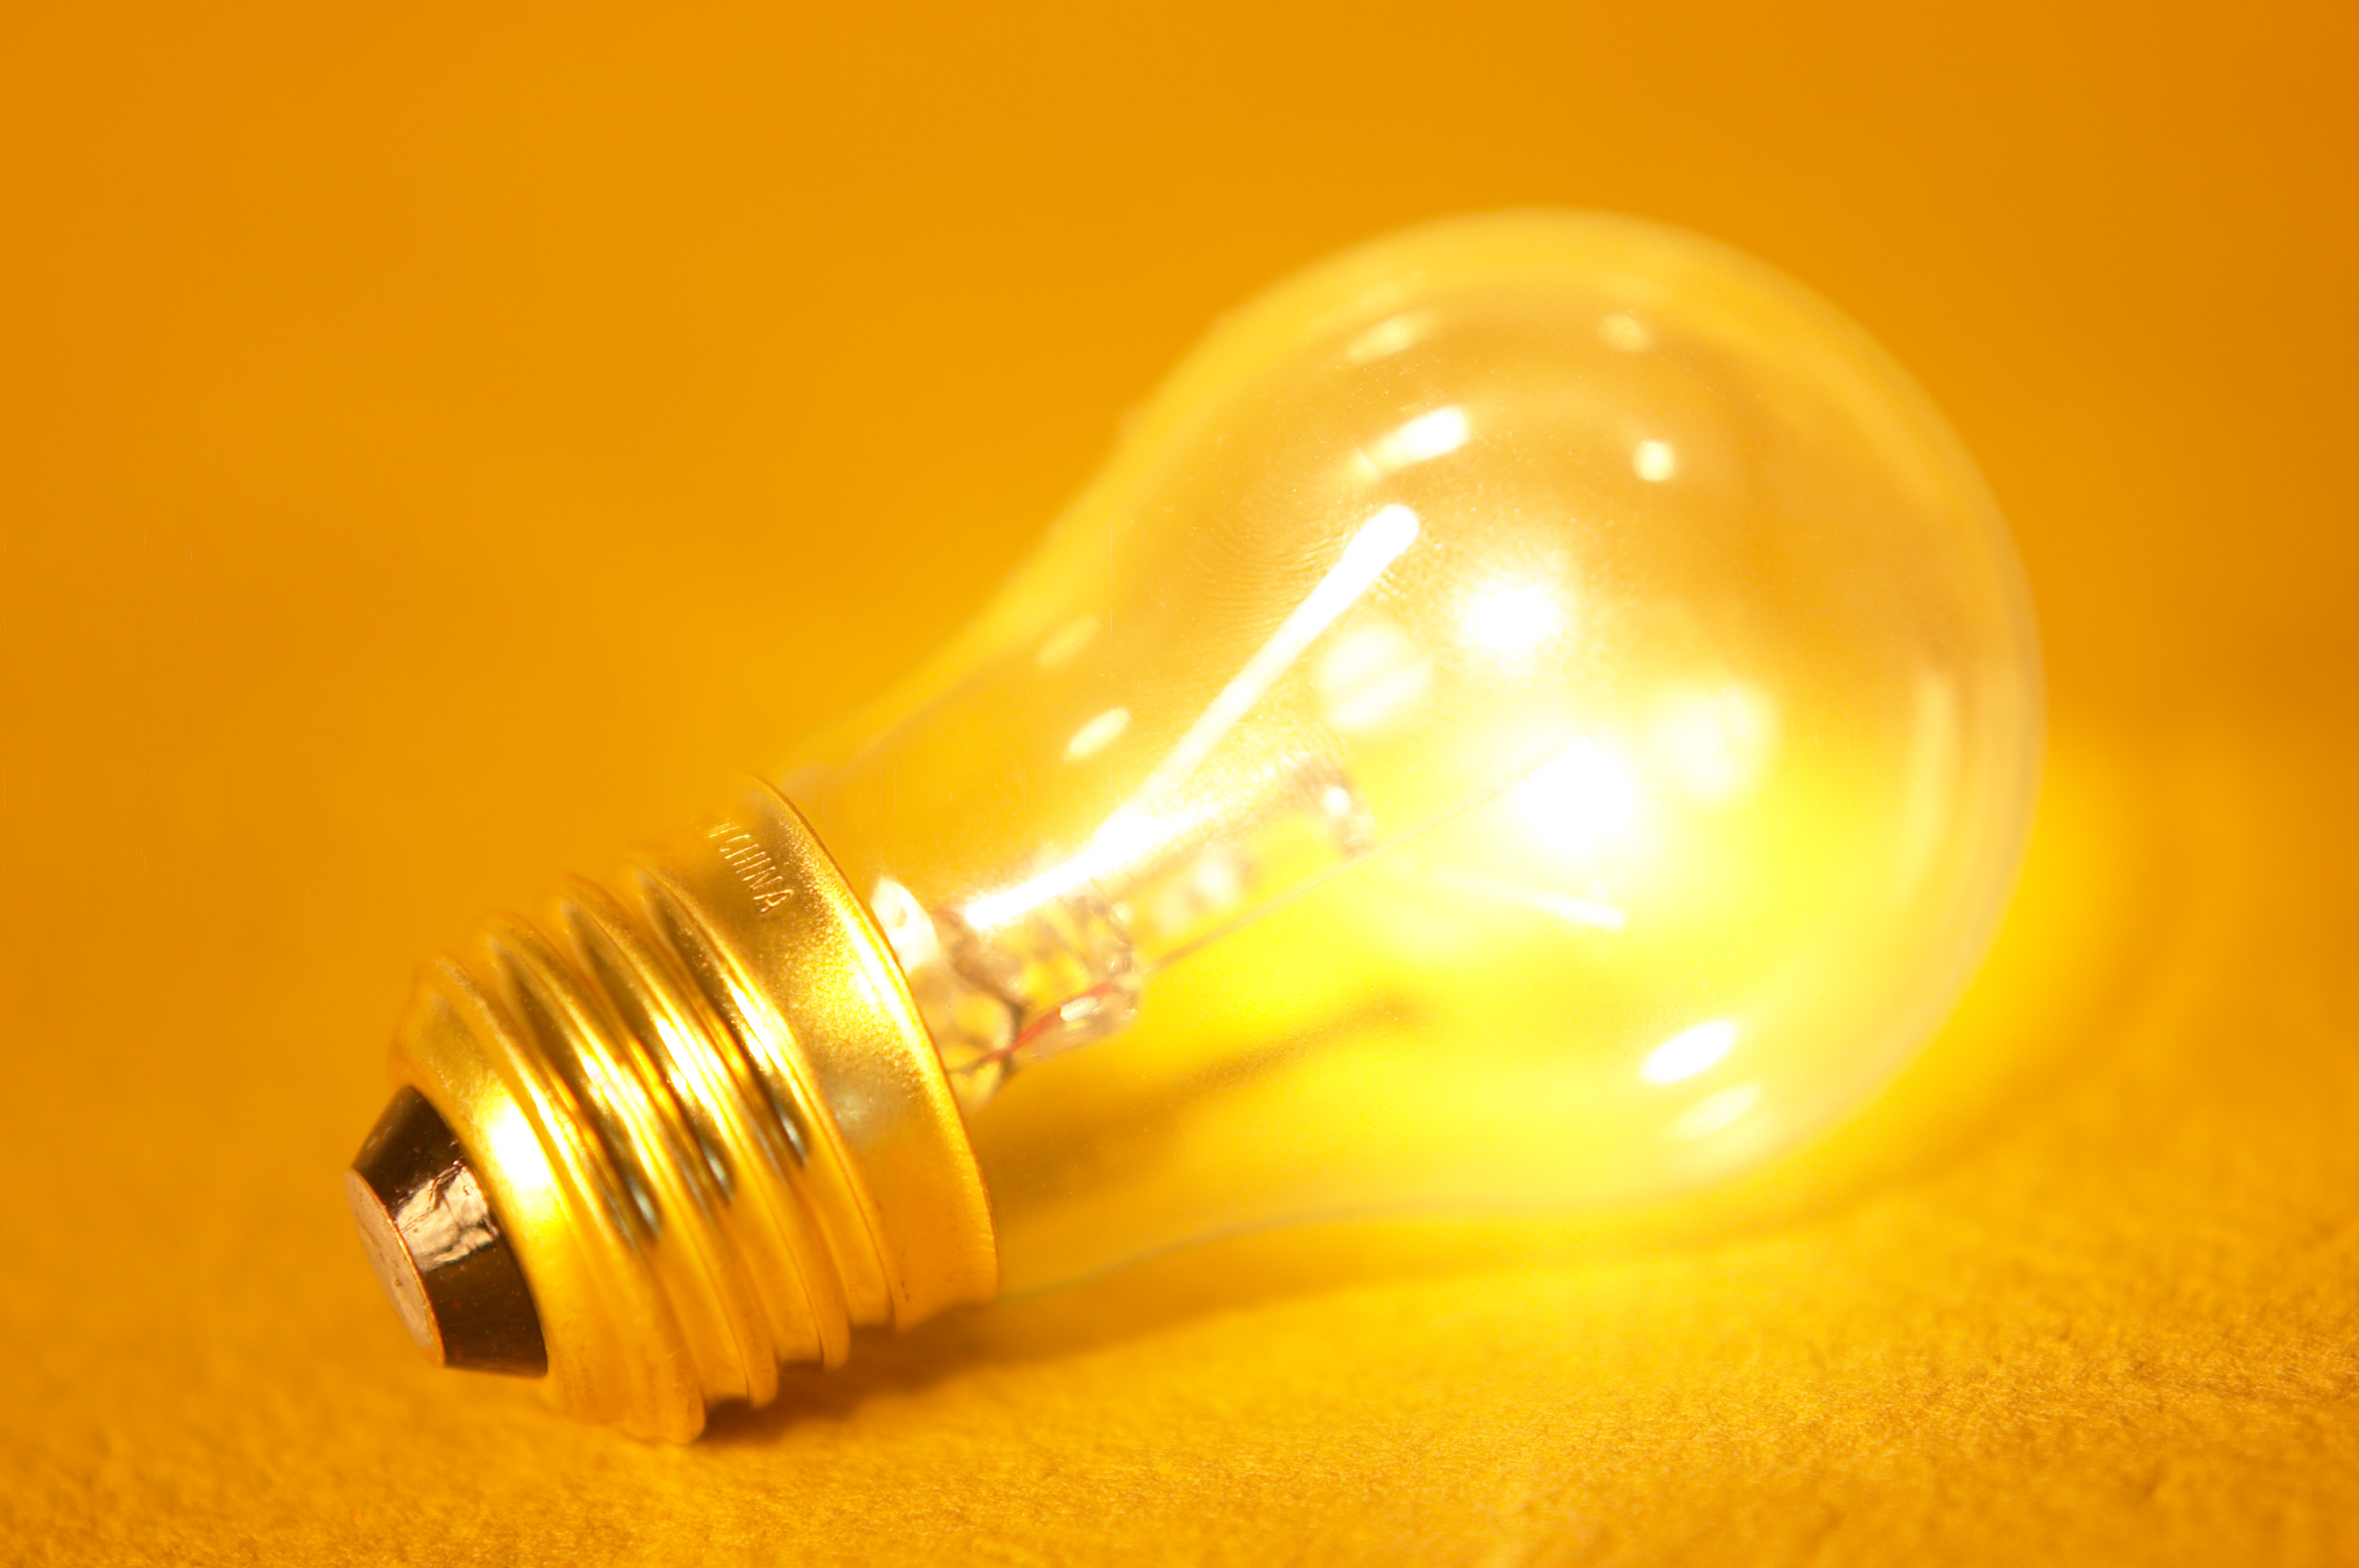 A photo of a lightbulb